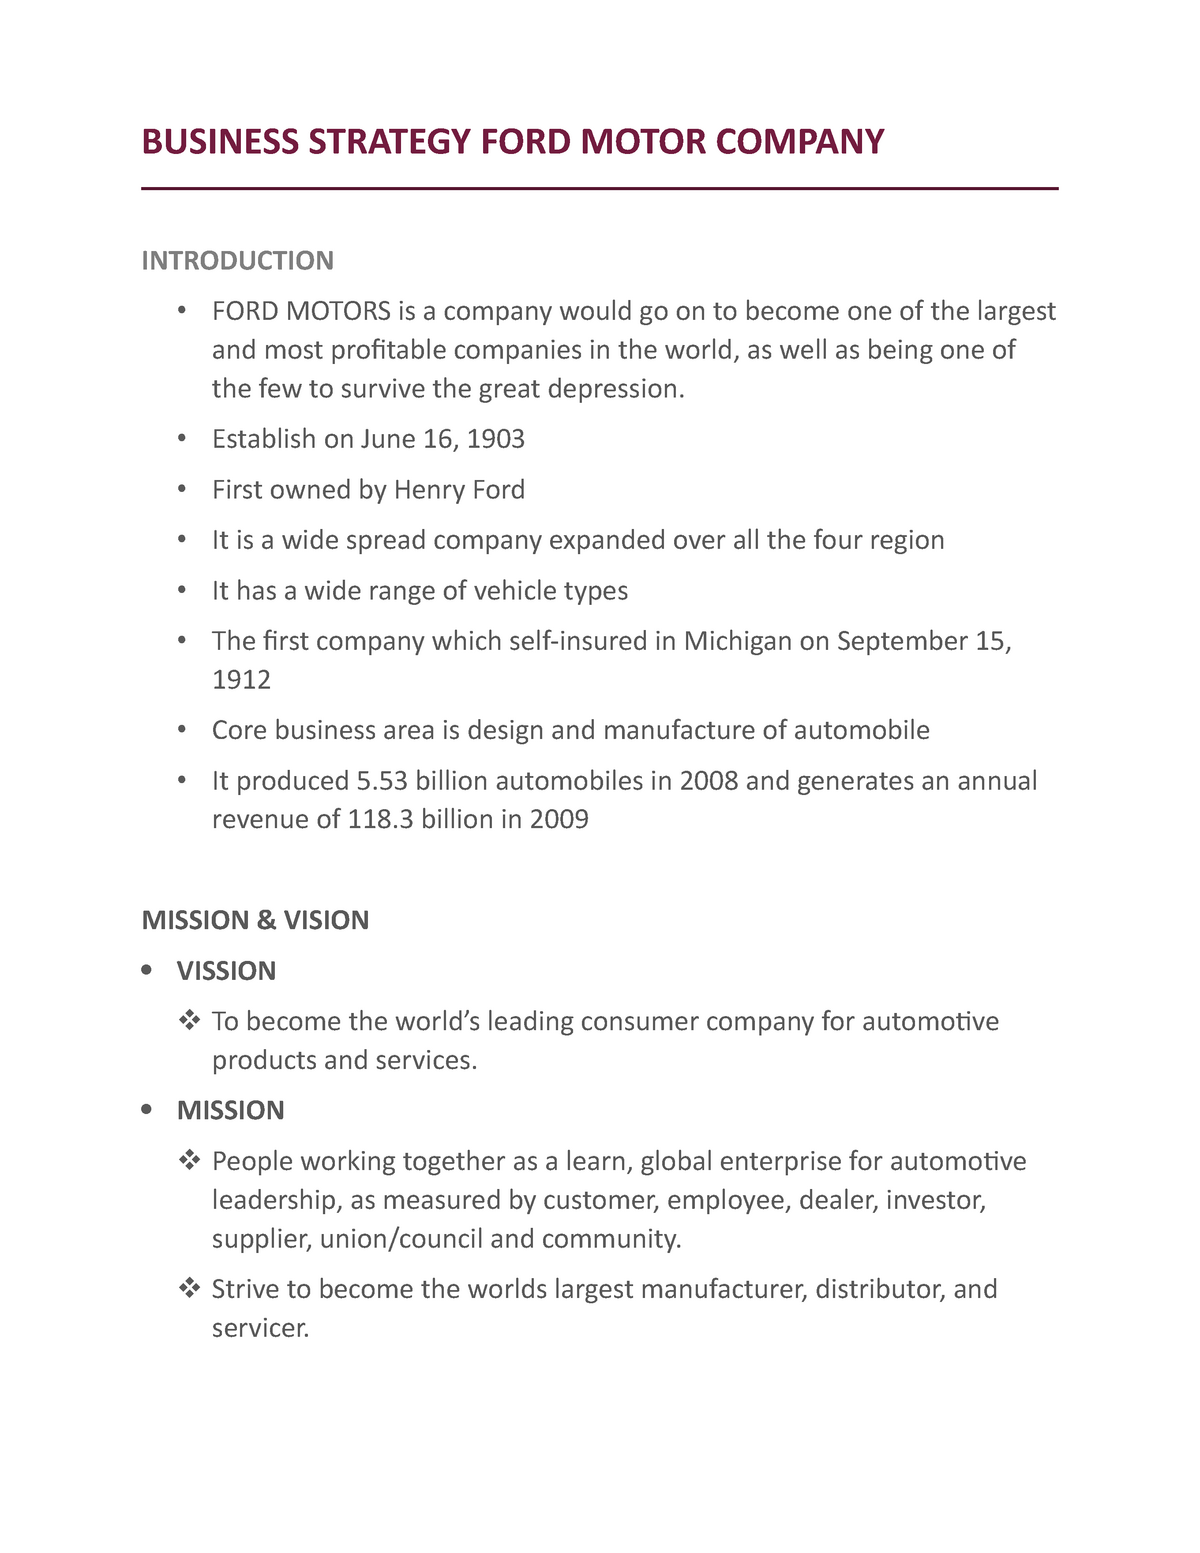 ford motor company case study strategic management pdf